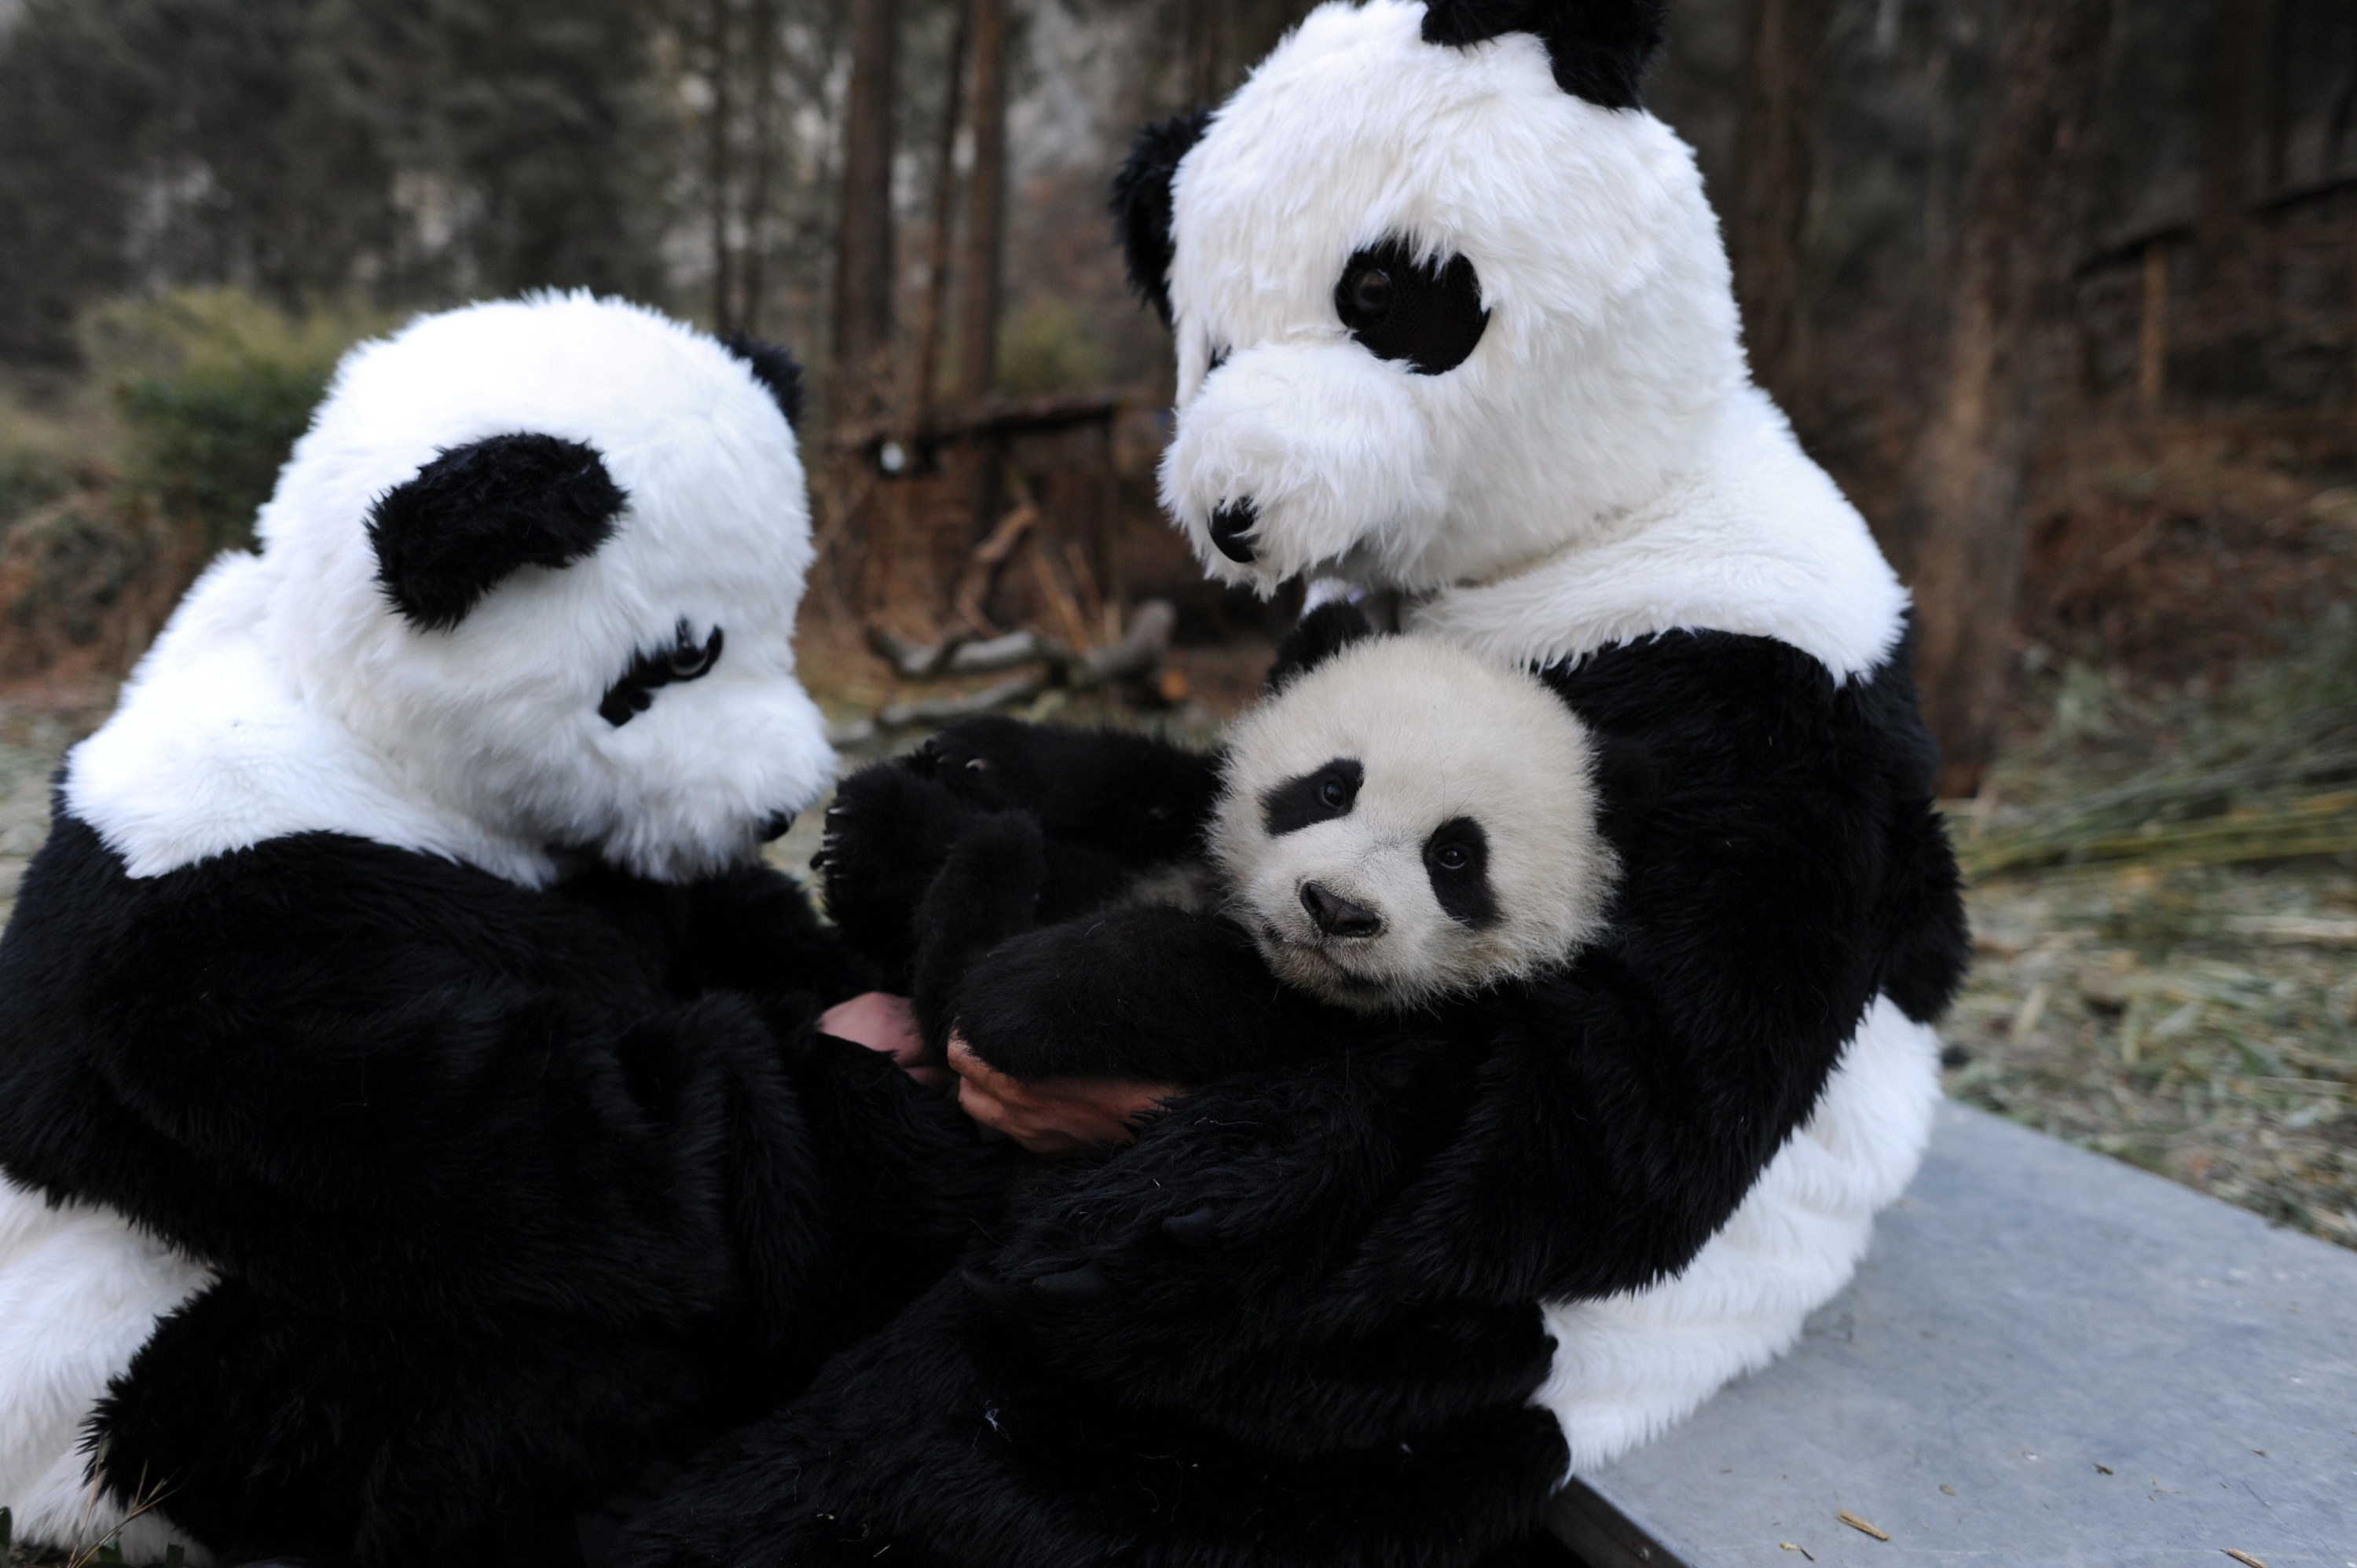 Close-up of panda being held by people in panda costumes